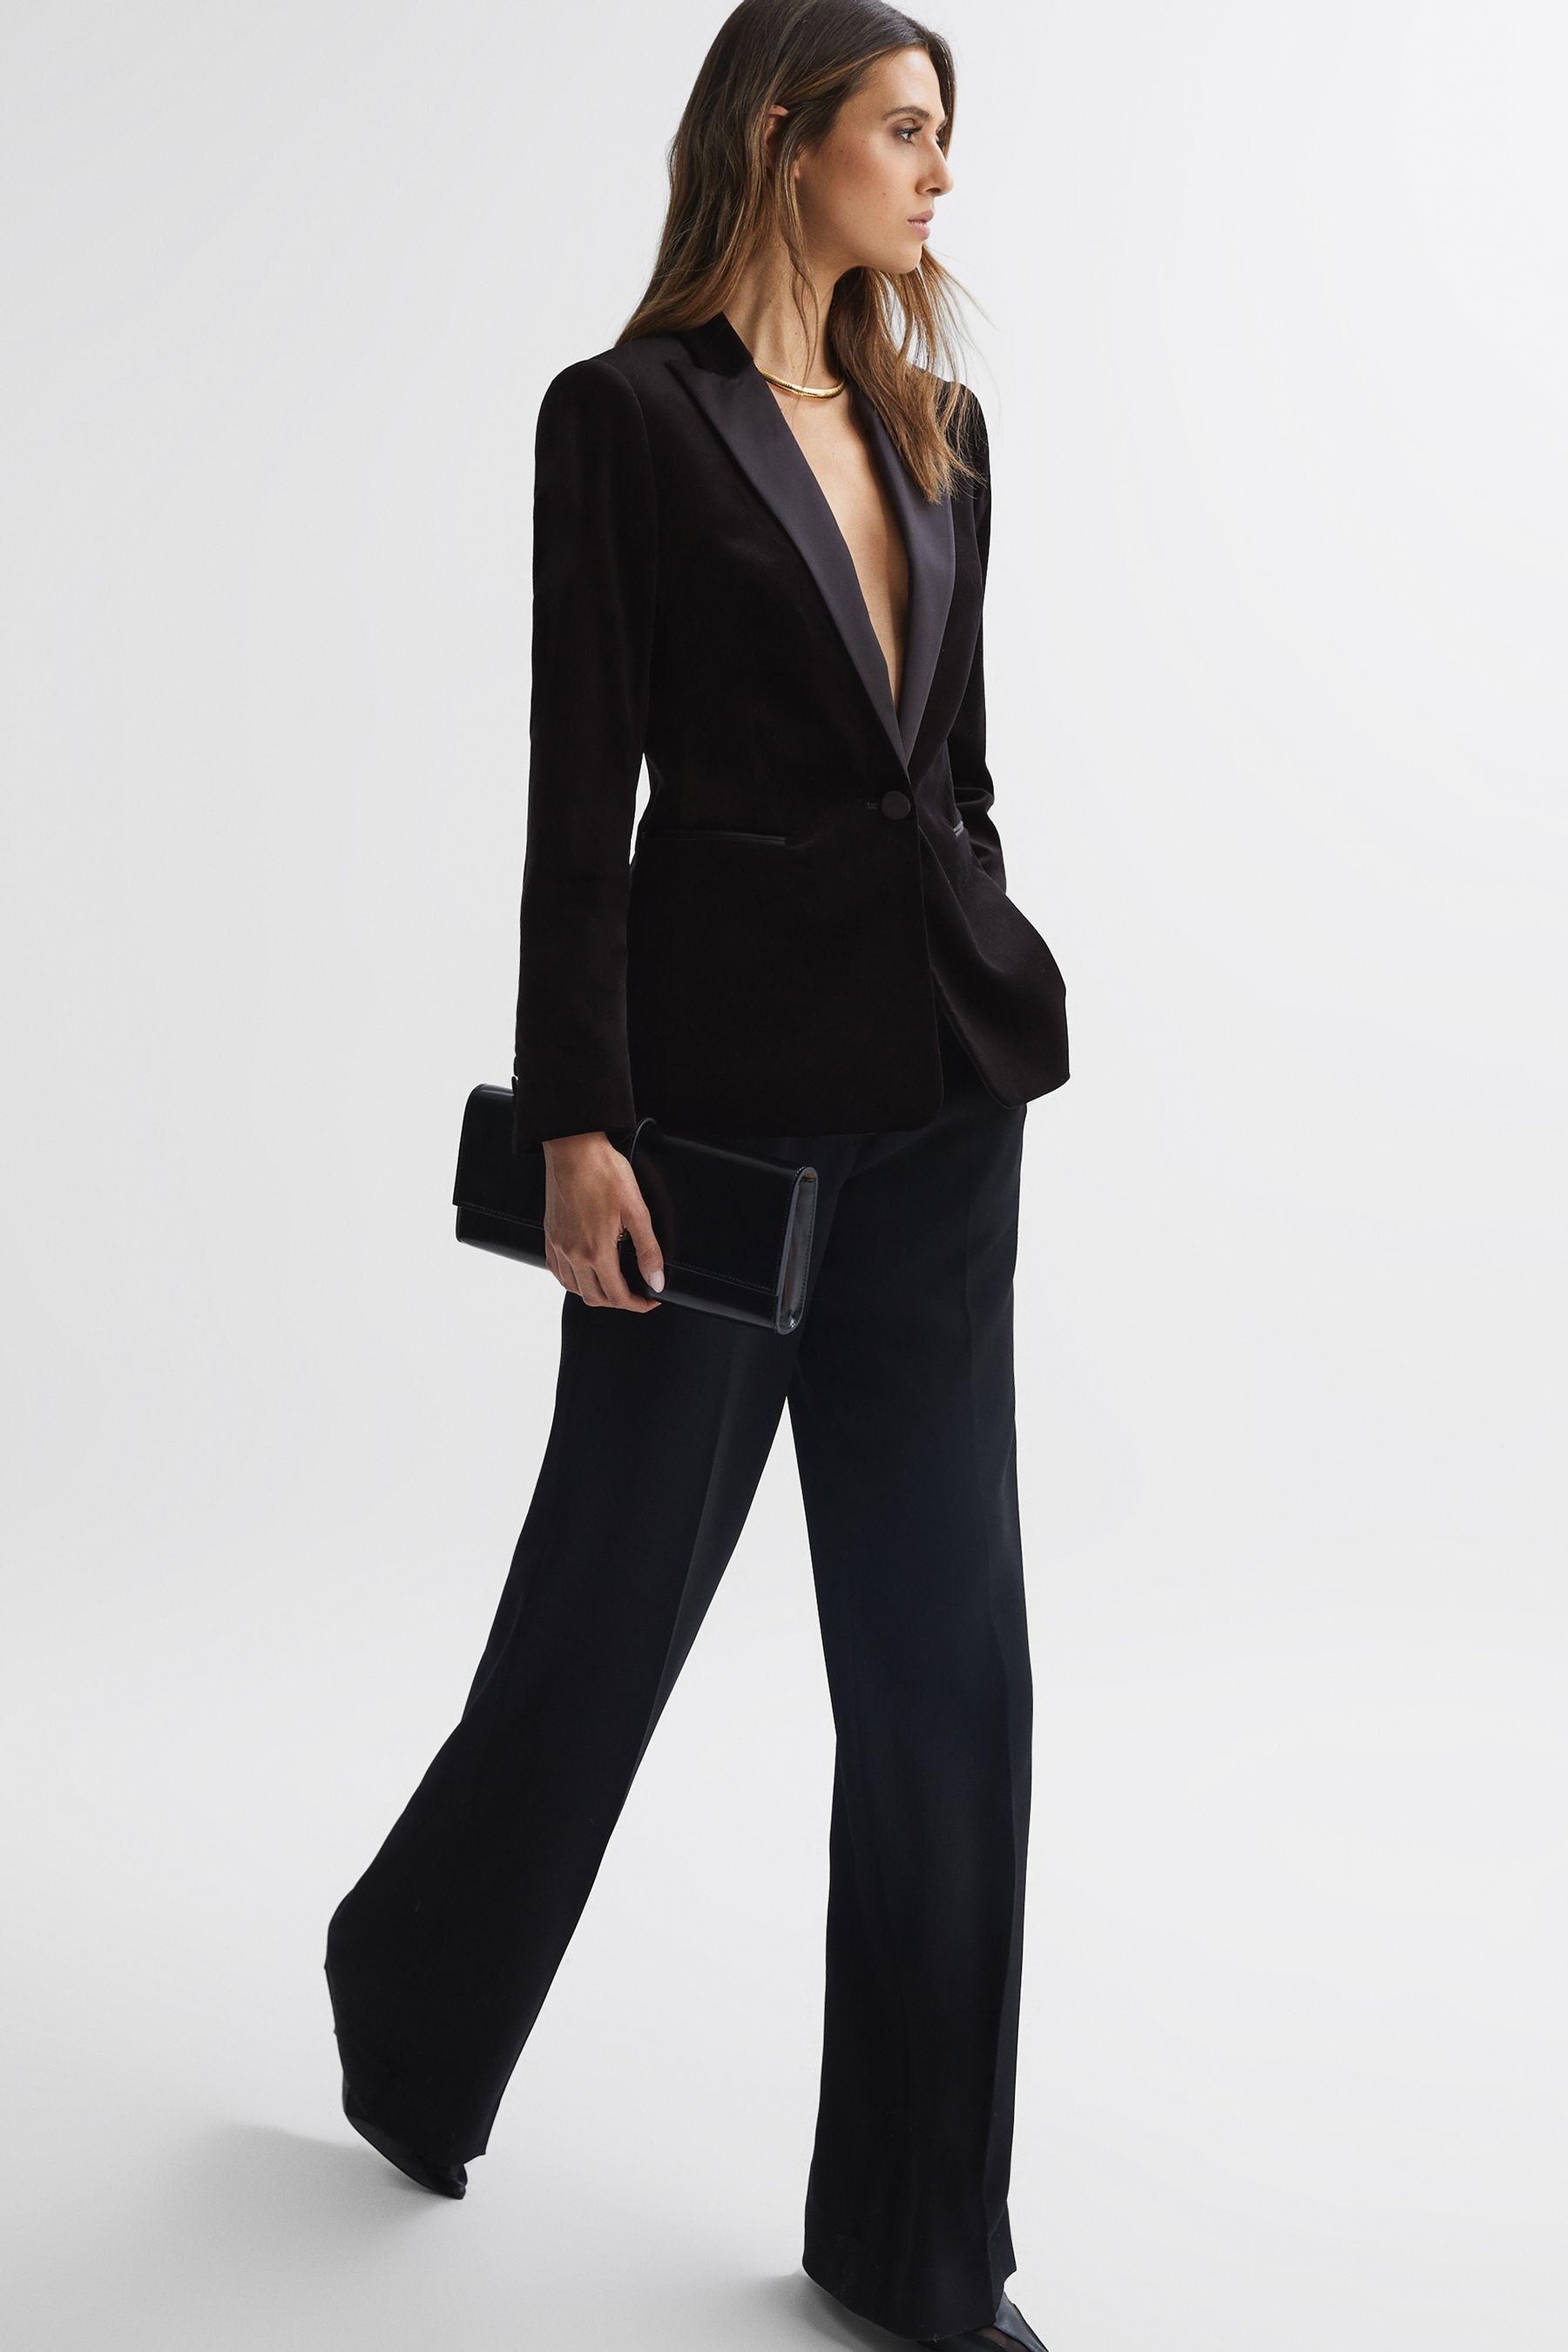 Reiss Opal - Black Fitted Velvet Single Breasted Suit Blazer, Us 0